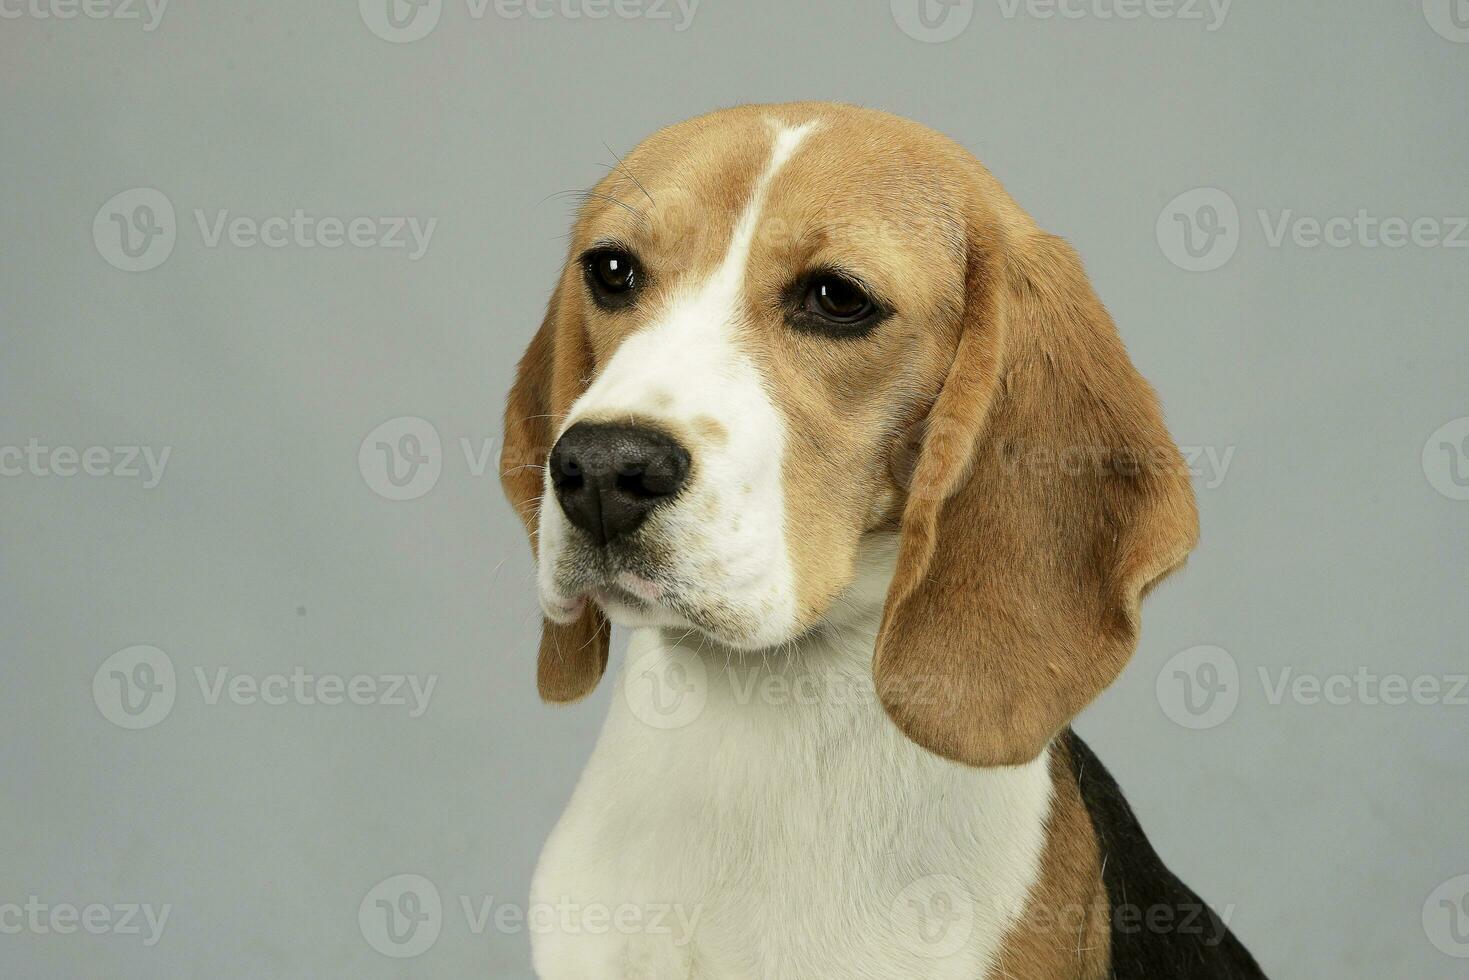 joung beagle portrait in photo studio